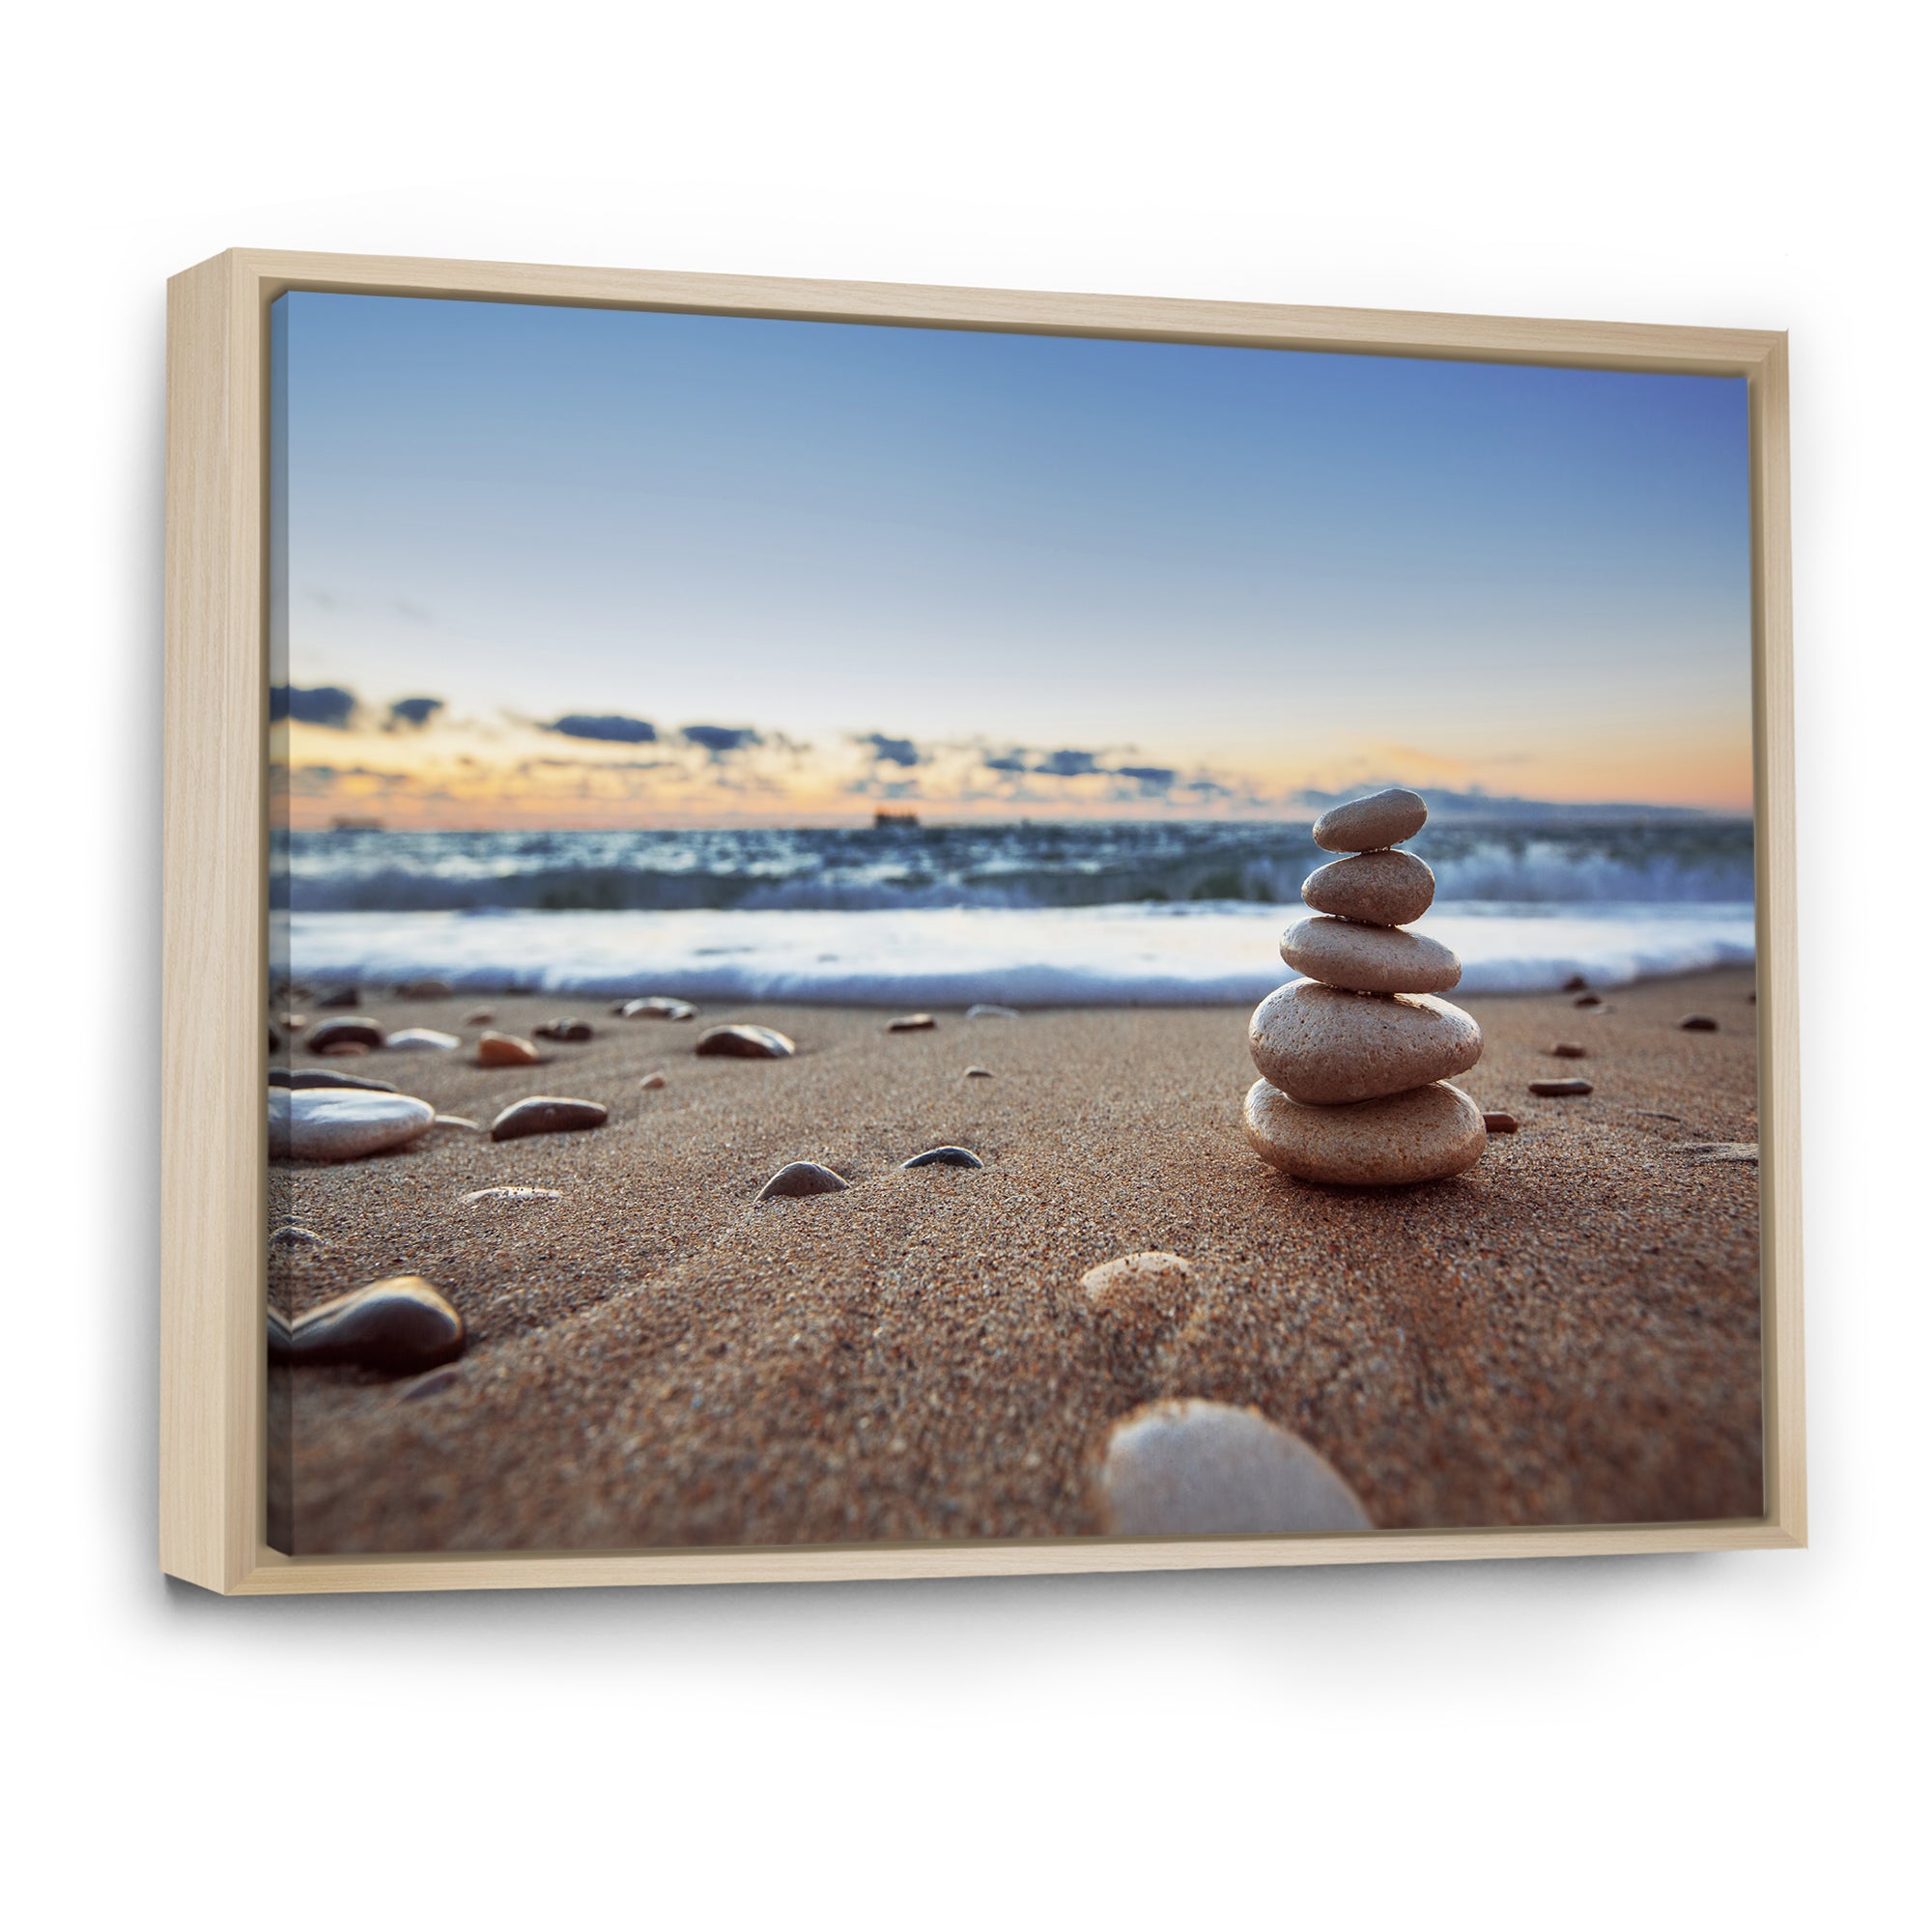 Stones Balance on Sandy Beach